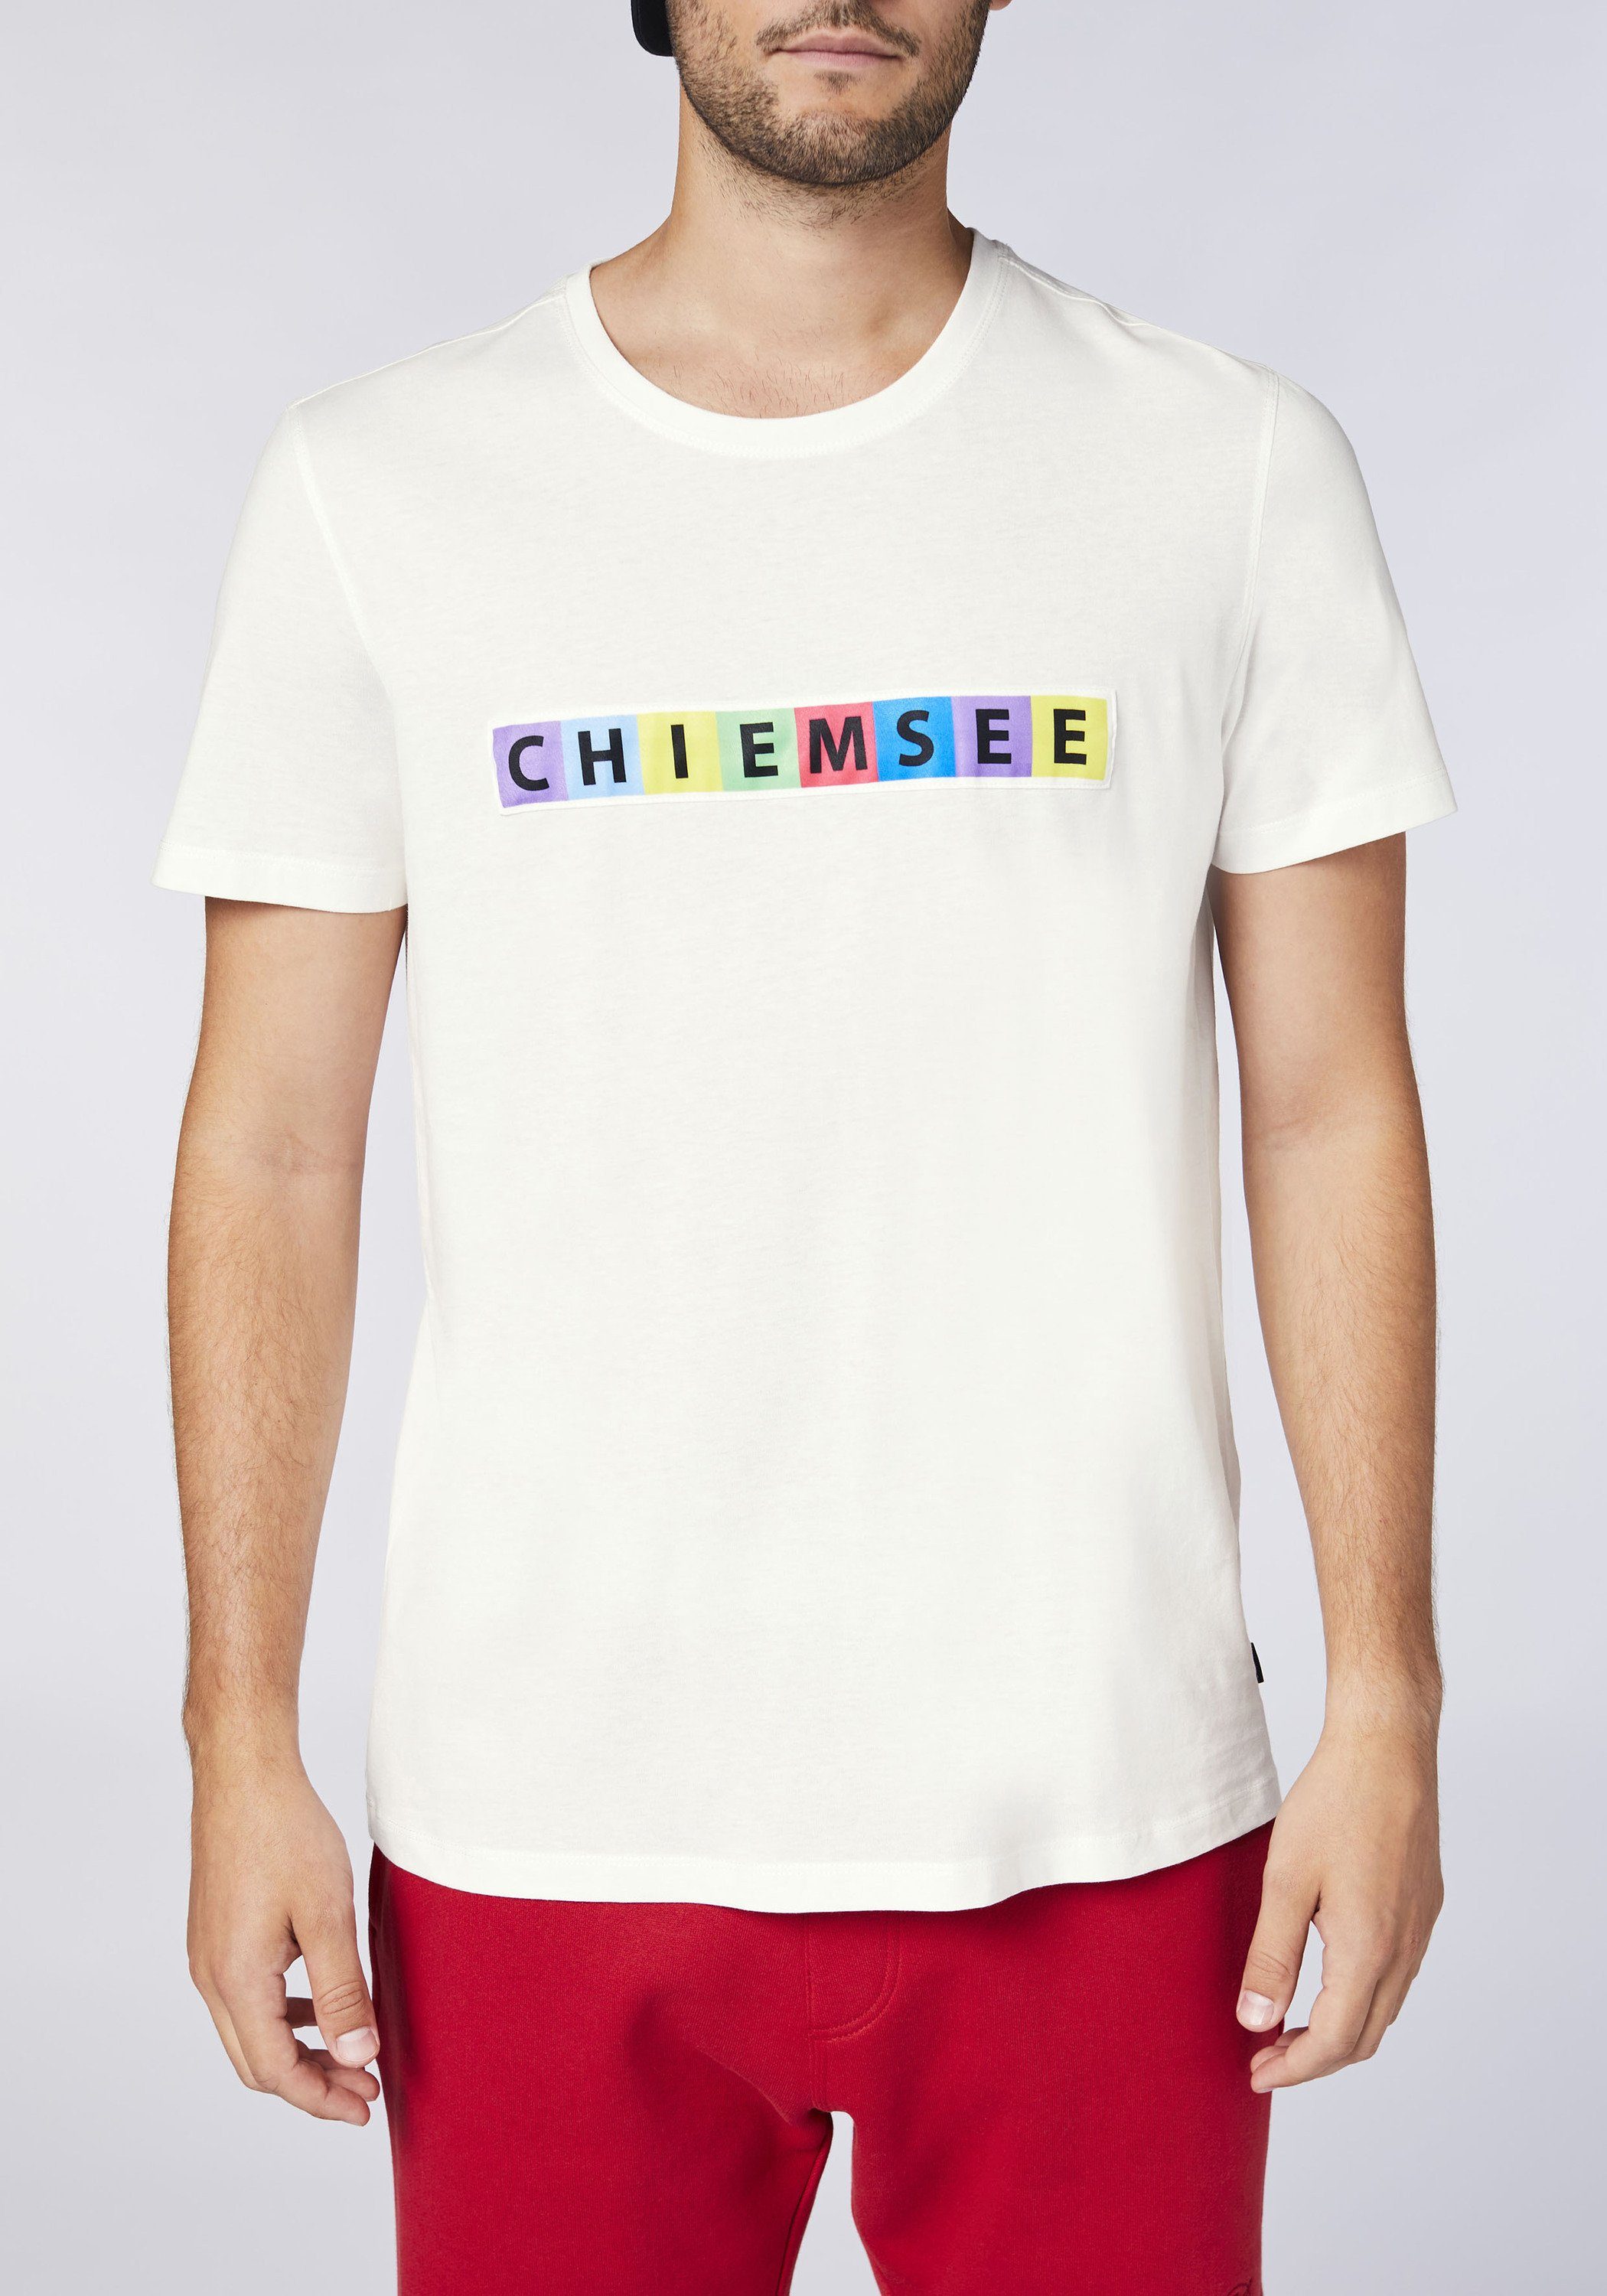 mit Star Print-Shirt T-Shirt Multicolour-Logo White Chiemsee